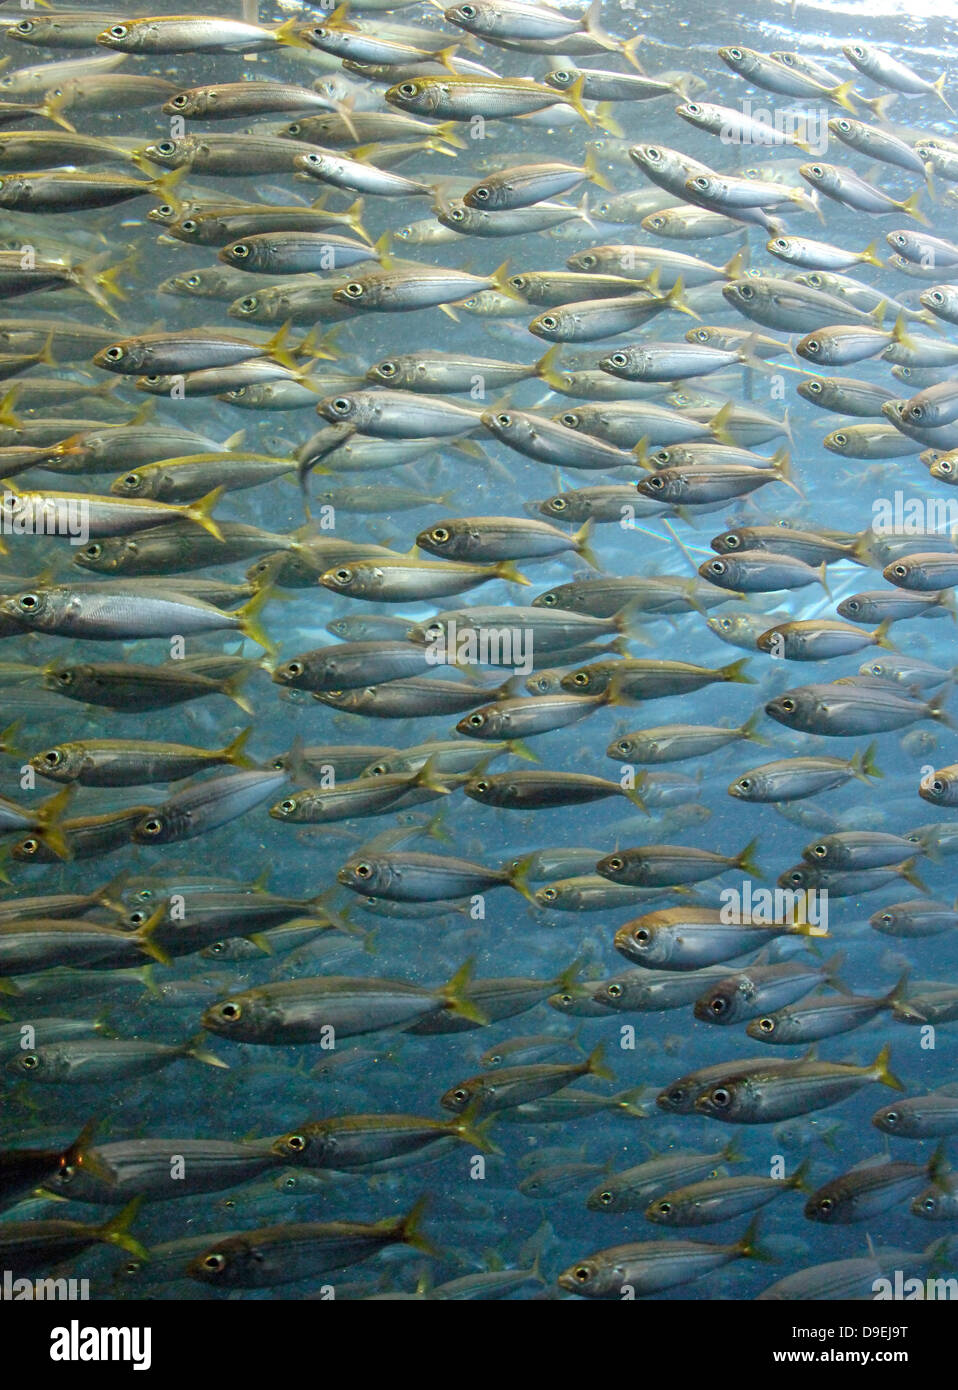 Rêve de poissons de grande capacité (aquarium) Banque D'Images